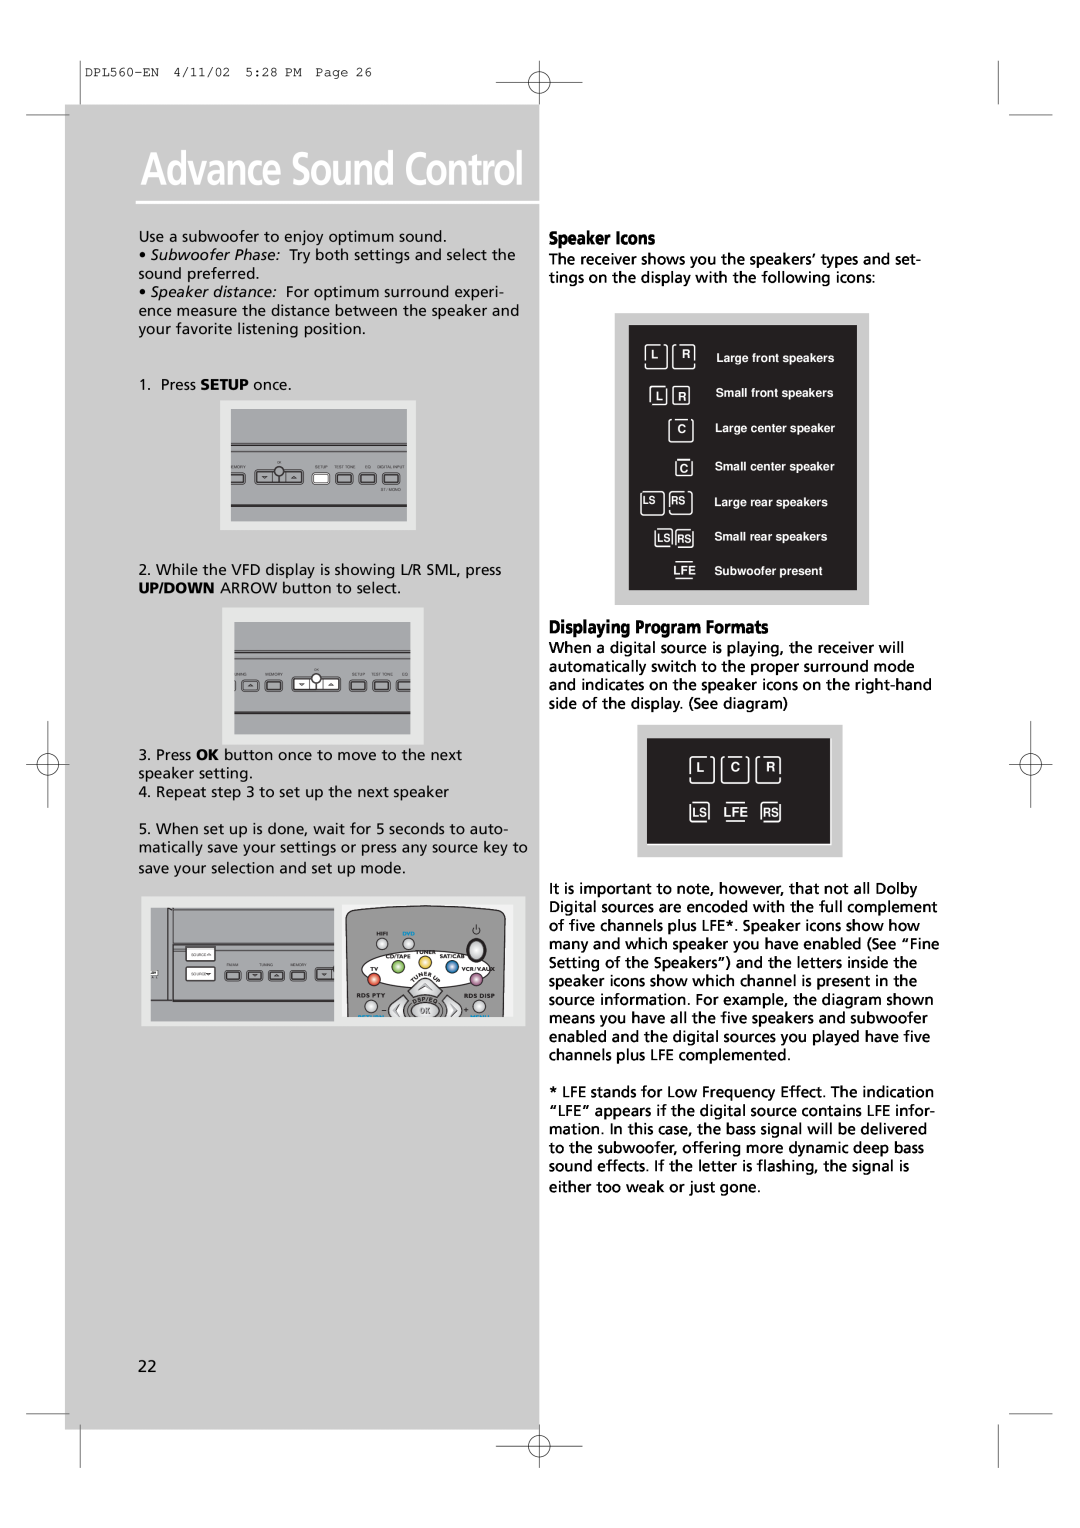 Technicolor - Thomson DPL560HT manual Advance Sound Control, Speaker Icons, Displaying Program Formats 